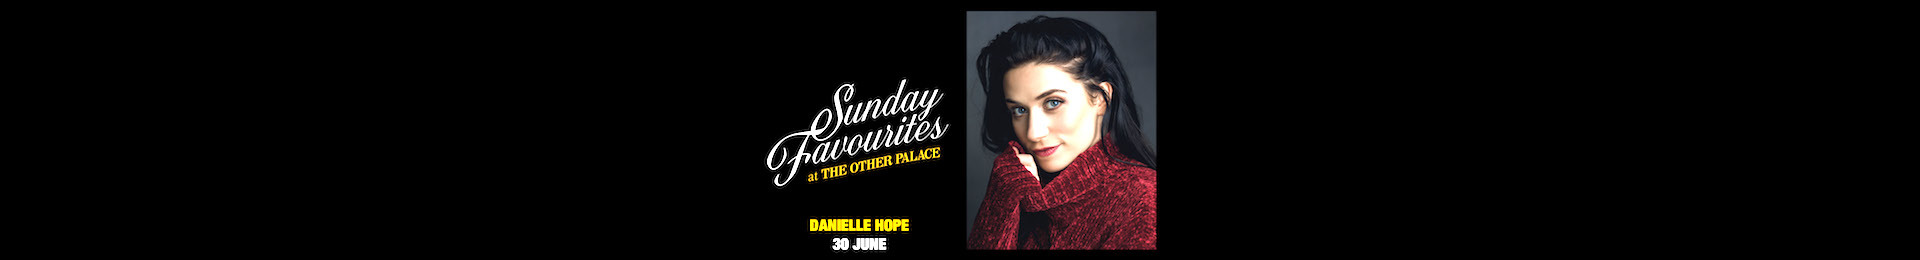 Sunday Favourites: Danielle Hope banner image